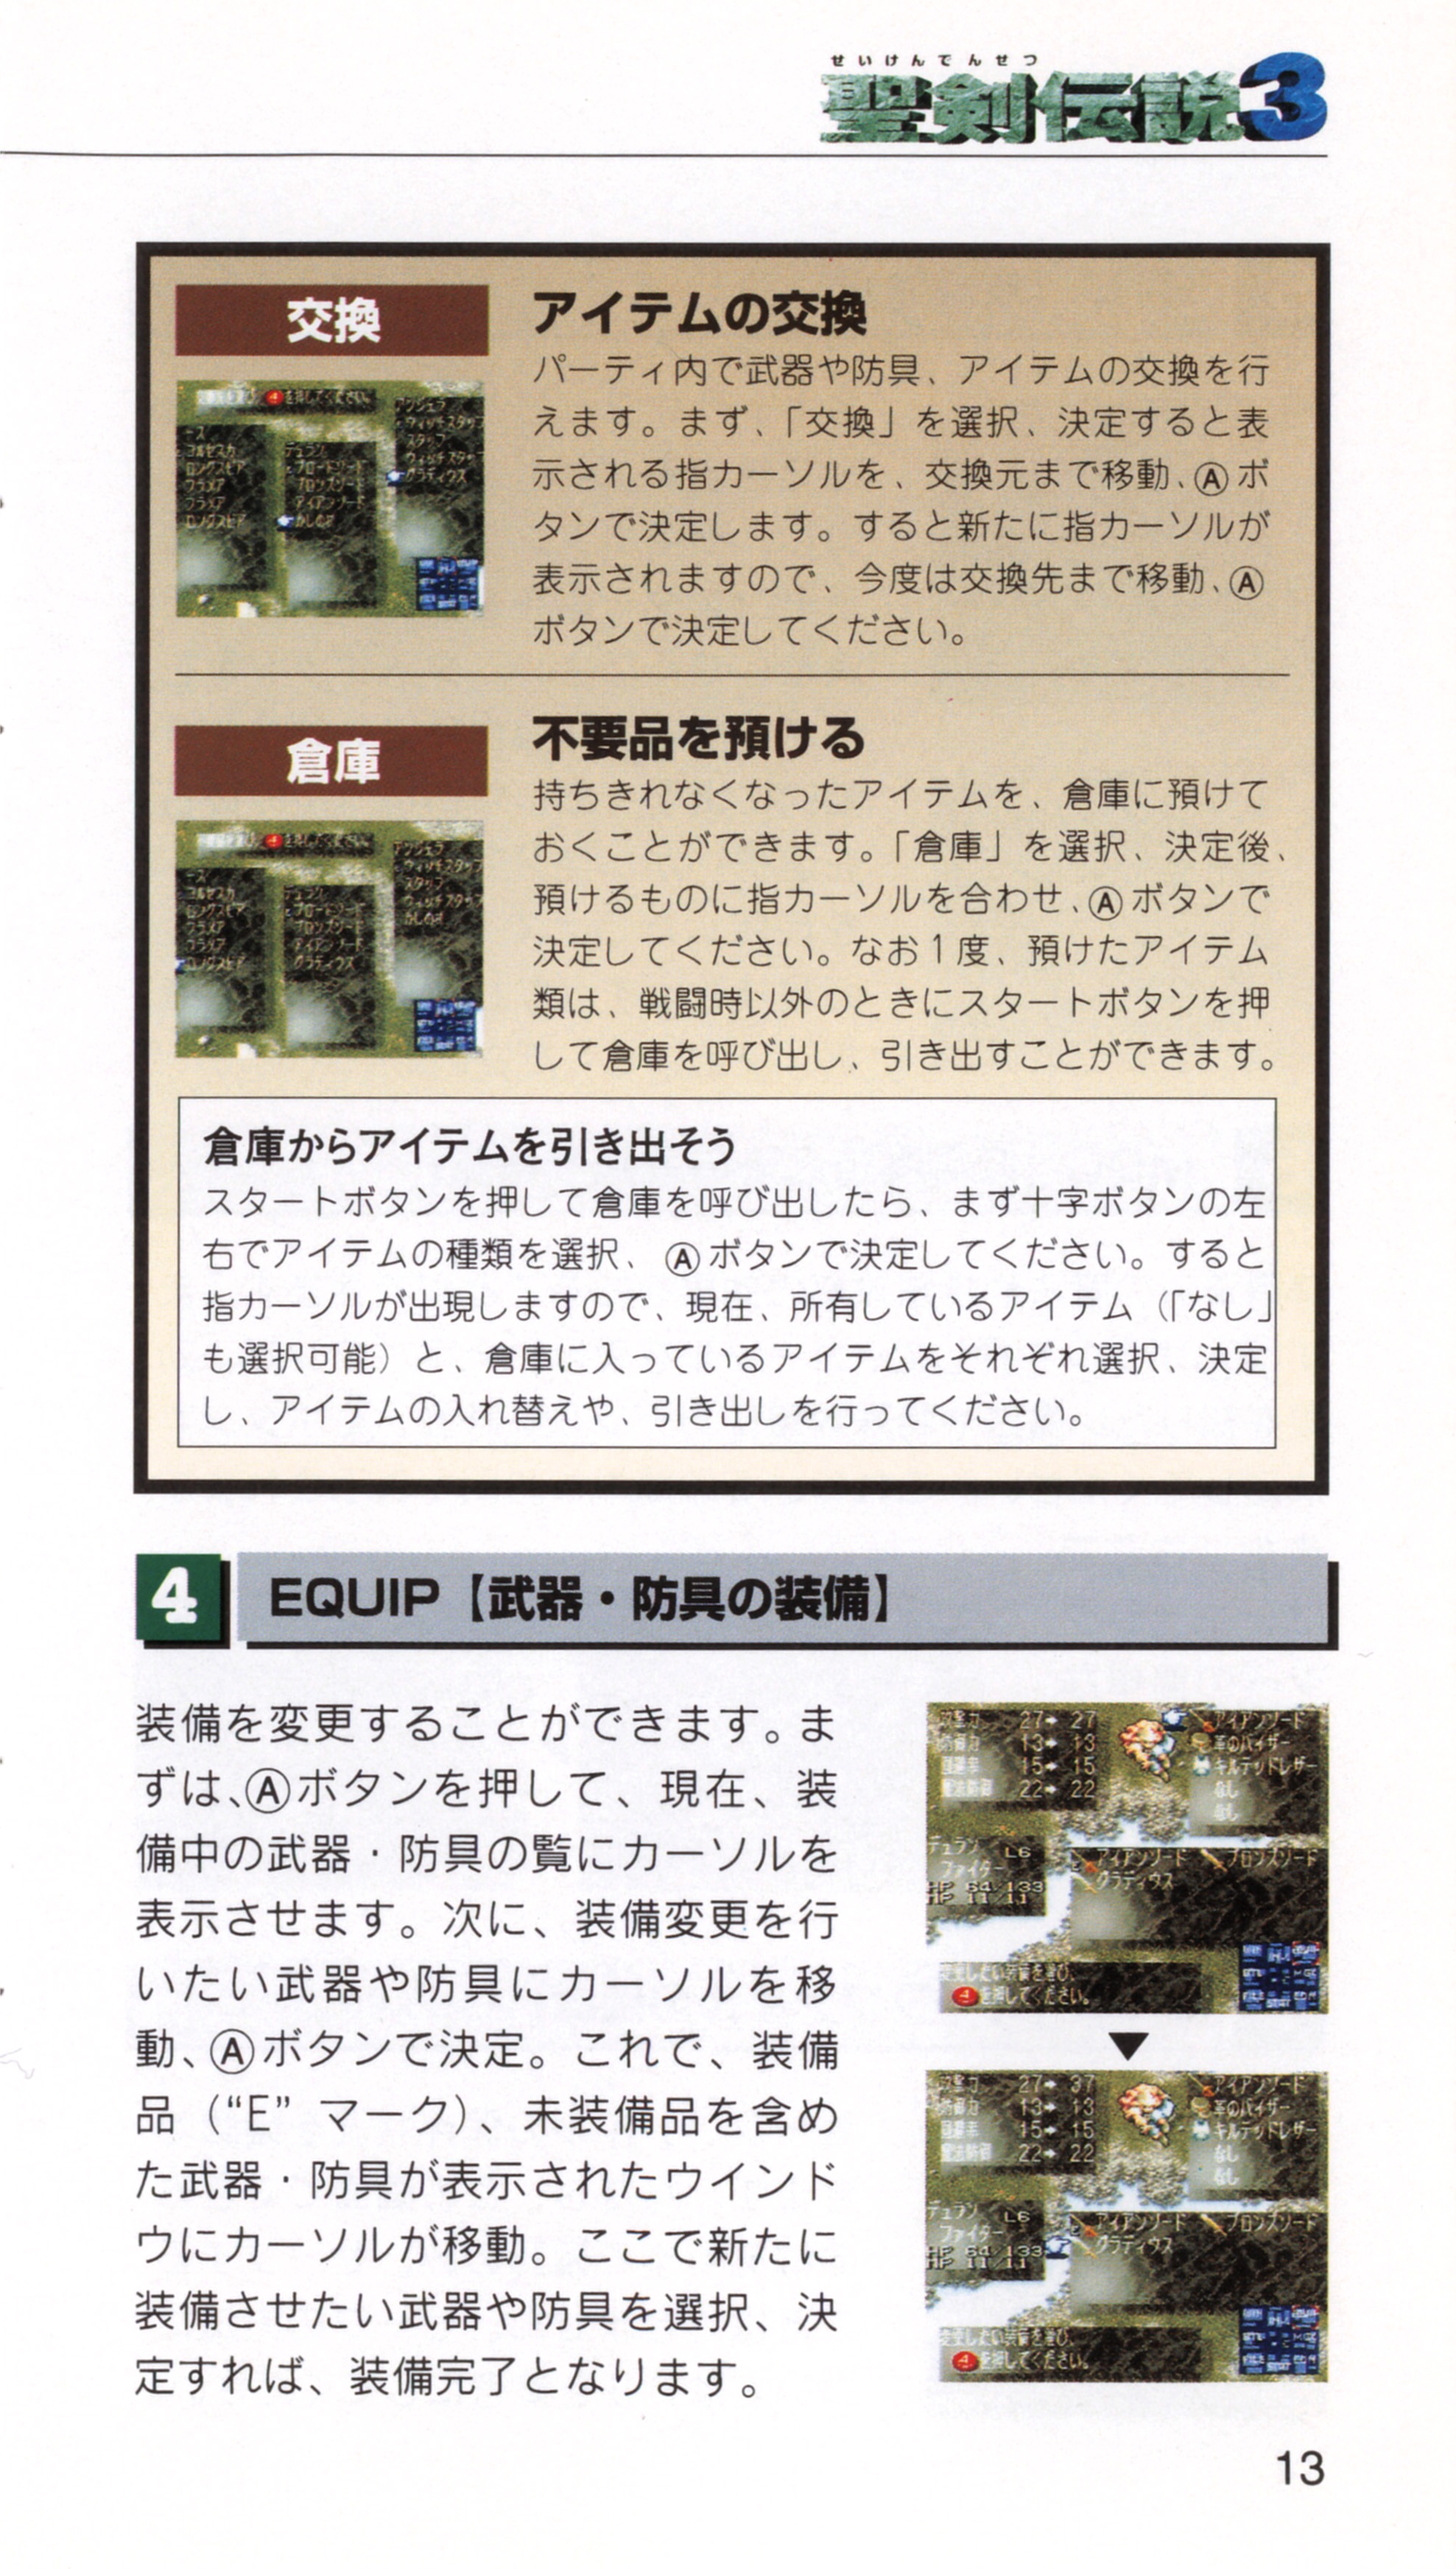 Seiken Densetsu 3 [SHVC-A3DJ] (Super Famicom) - Box, Cart, Manual Scans  (1600DPI) : Squaresoft : Free Download, Borrow, and Streaming : Internet  Archive